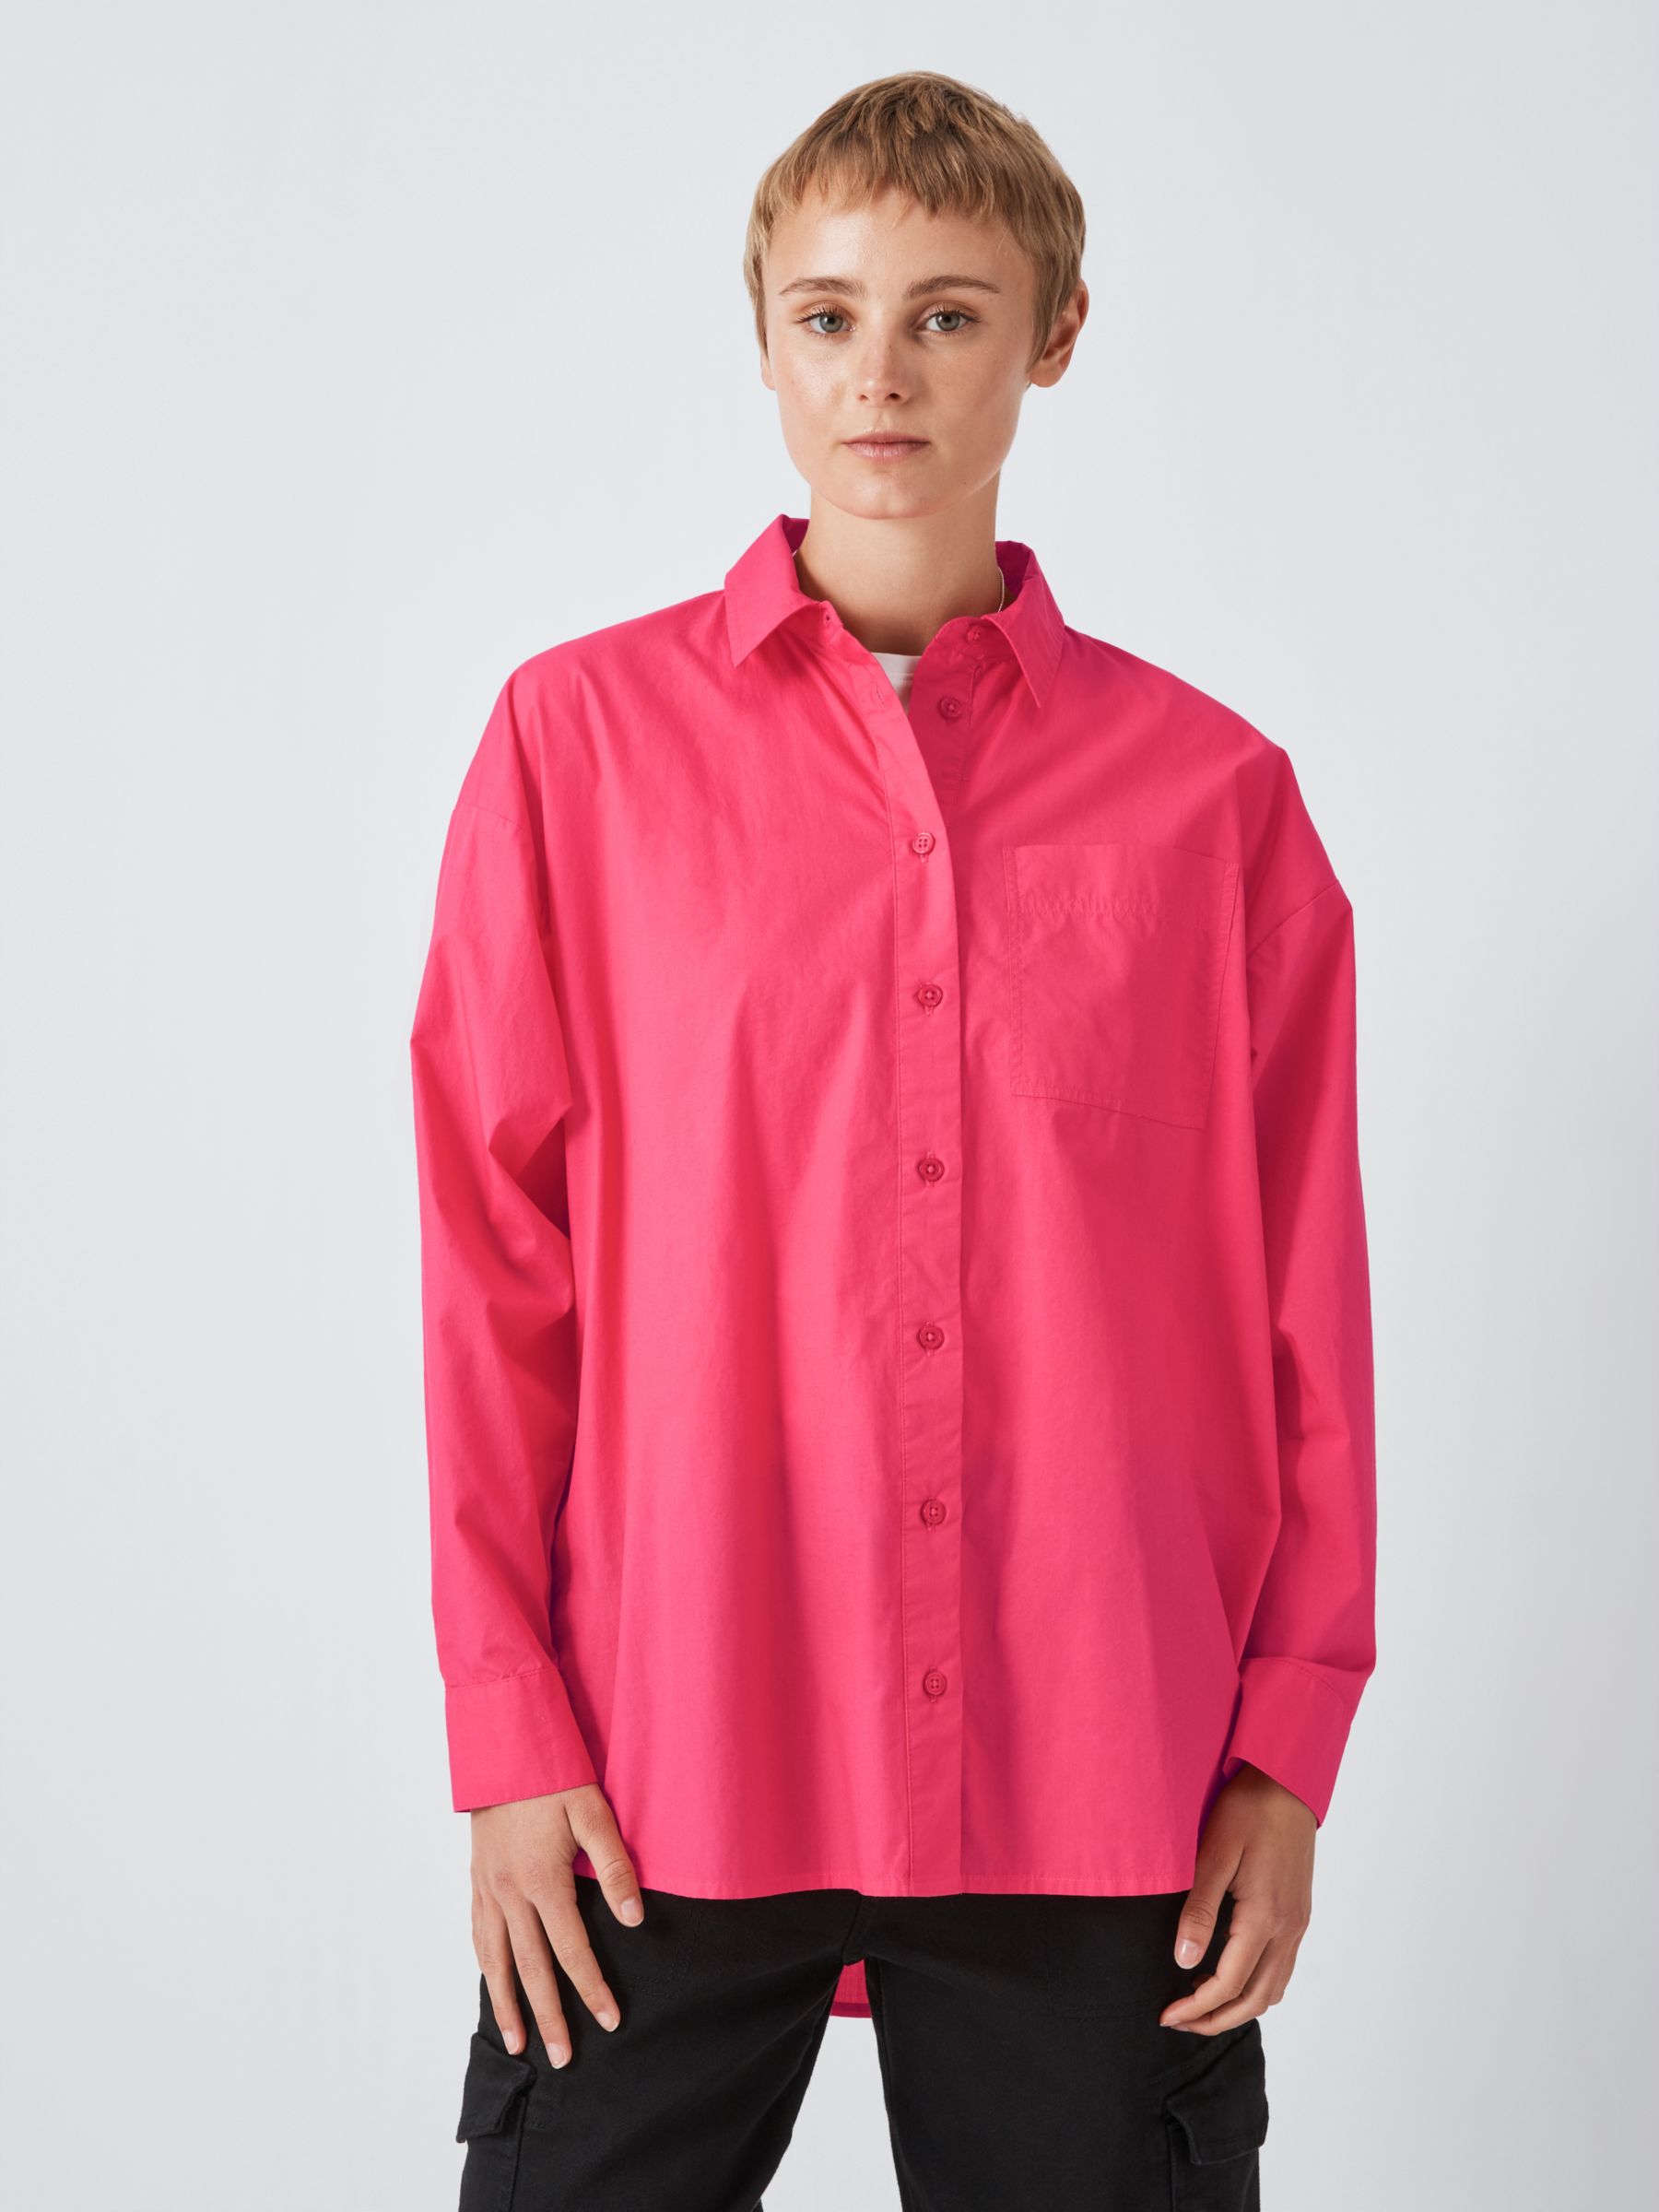 Divided H&M Top Womens 14 Shirt Purple White Polka Dot Long Sleeve Button  Collar